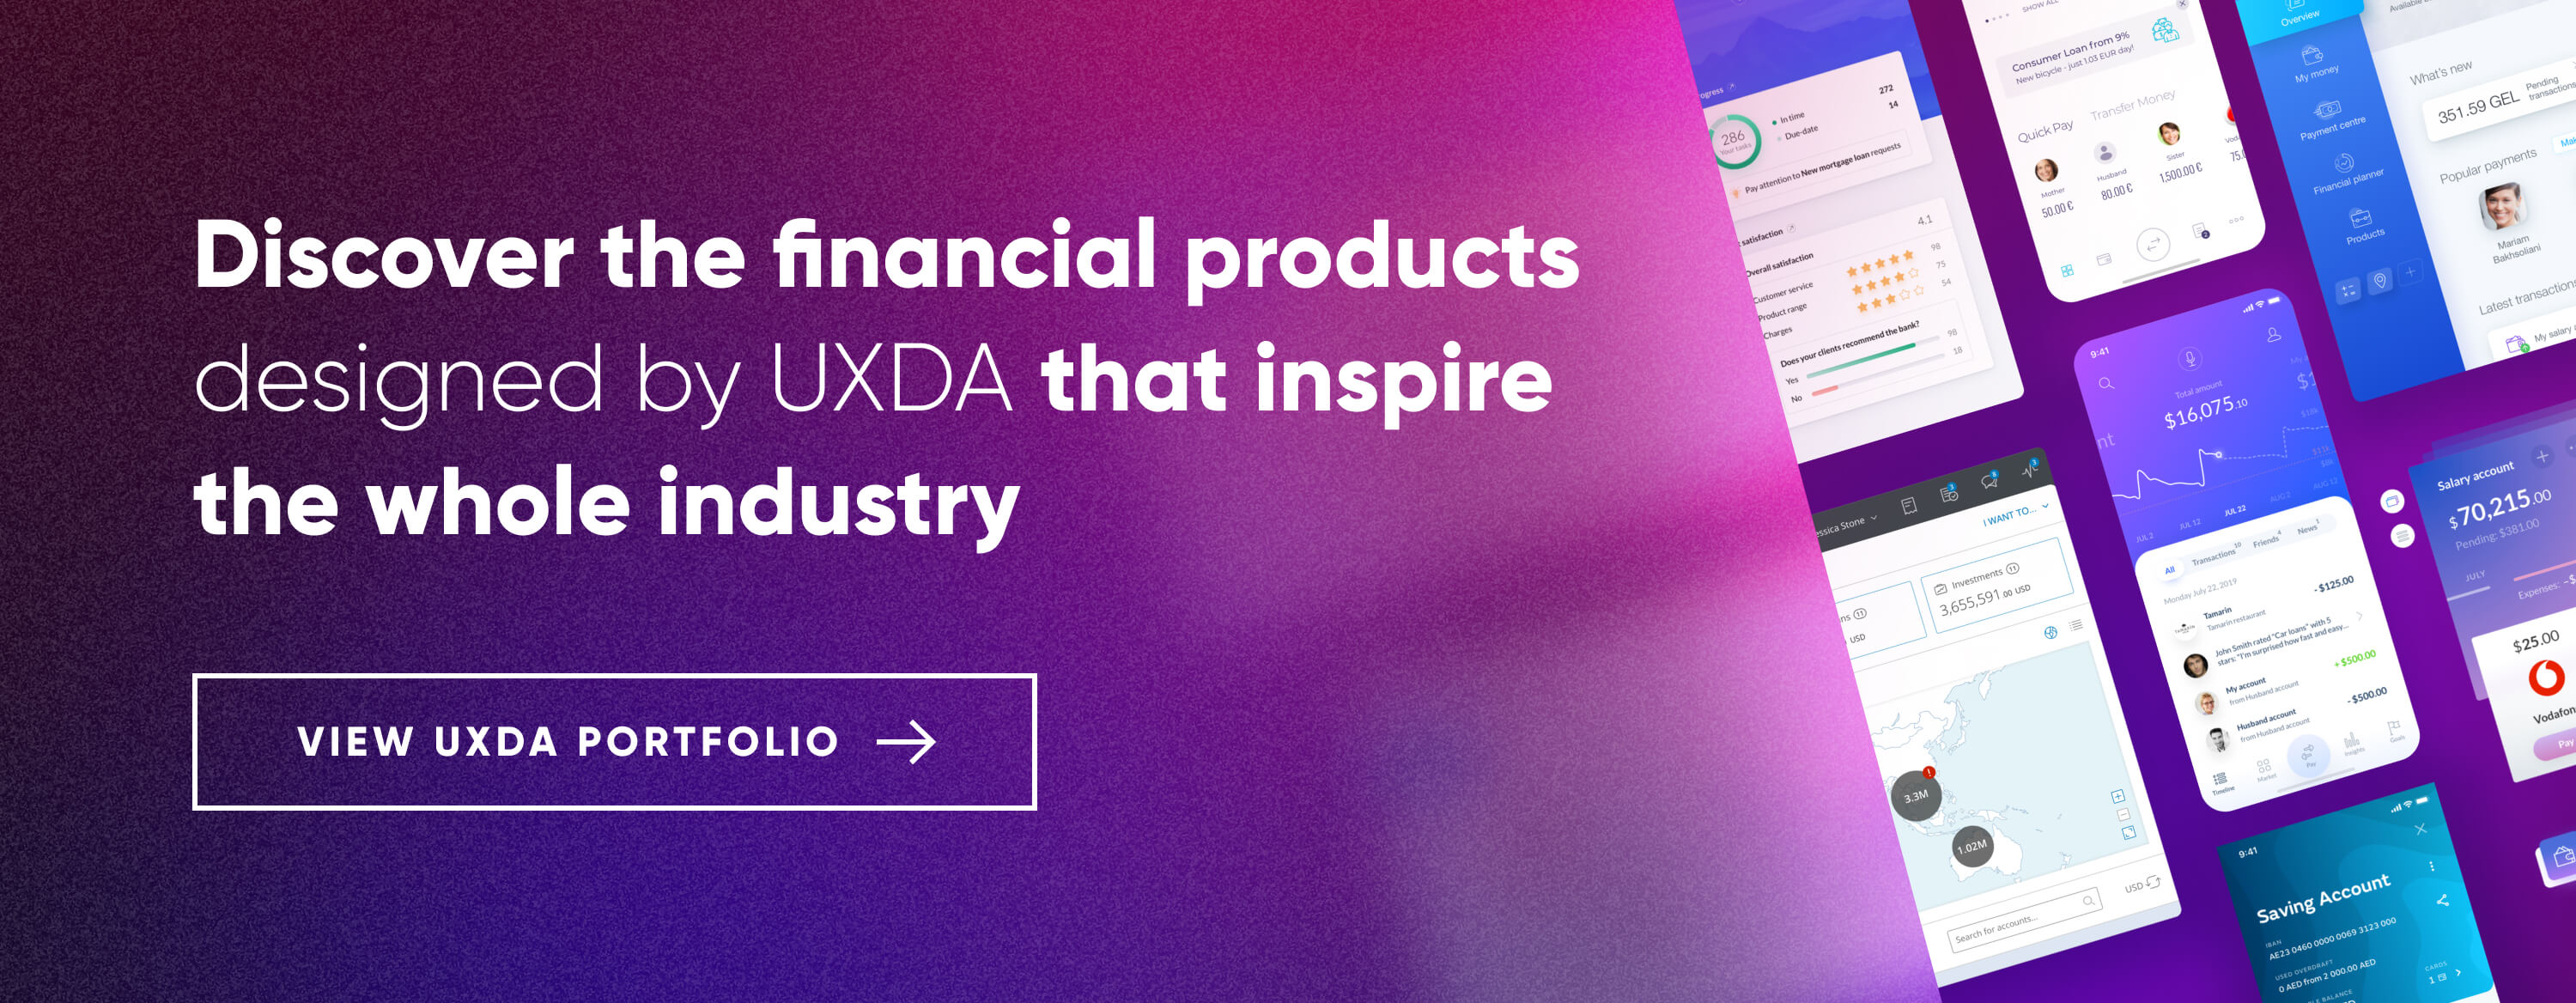 uxda-portfolio-financial-digital-product-inspire-industry-ux-1669631687.jpg